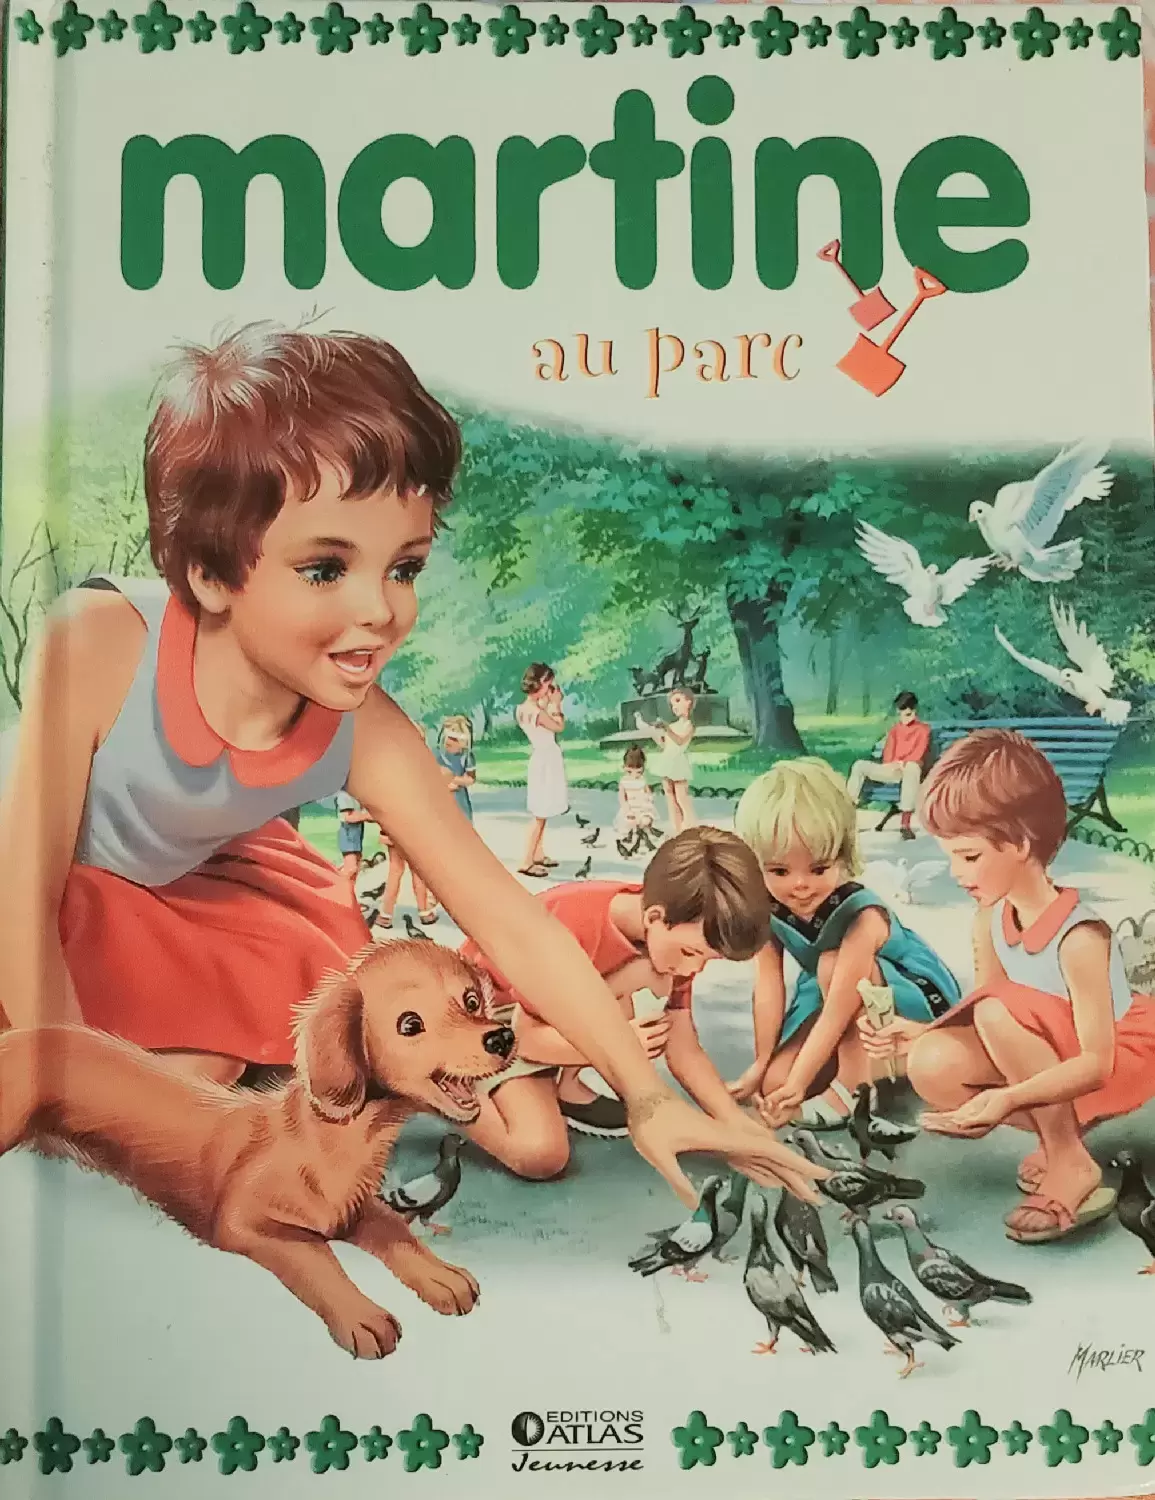 Martine - Martine au parc